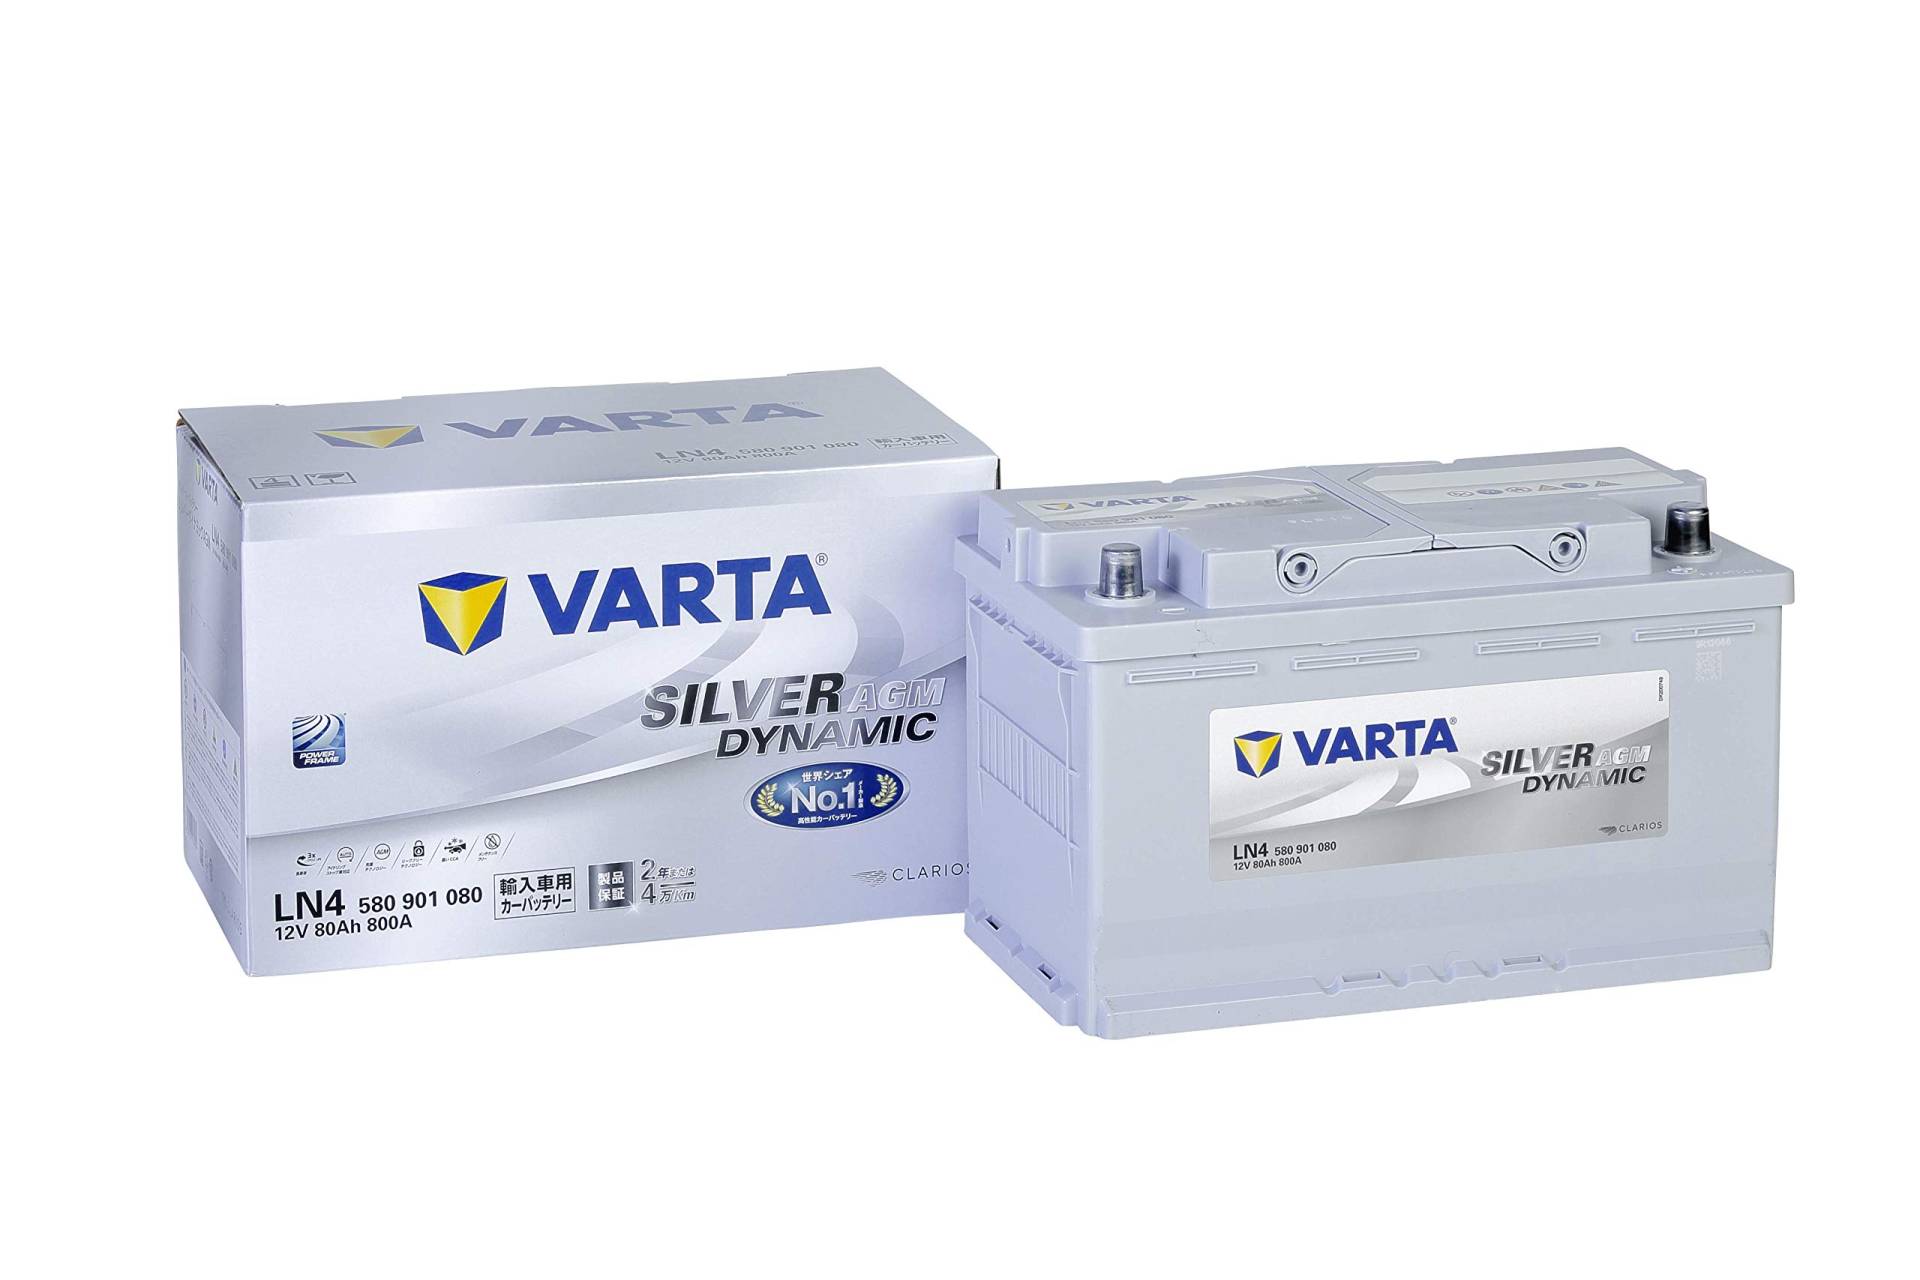 Varta F21 Anlasser Batterie, 12V, 80Ah, 18.7cm x 13.6cm x 11cm von Varta